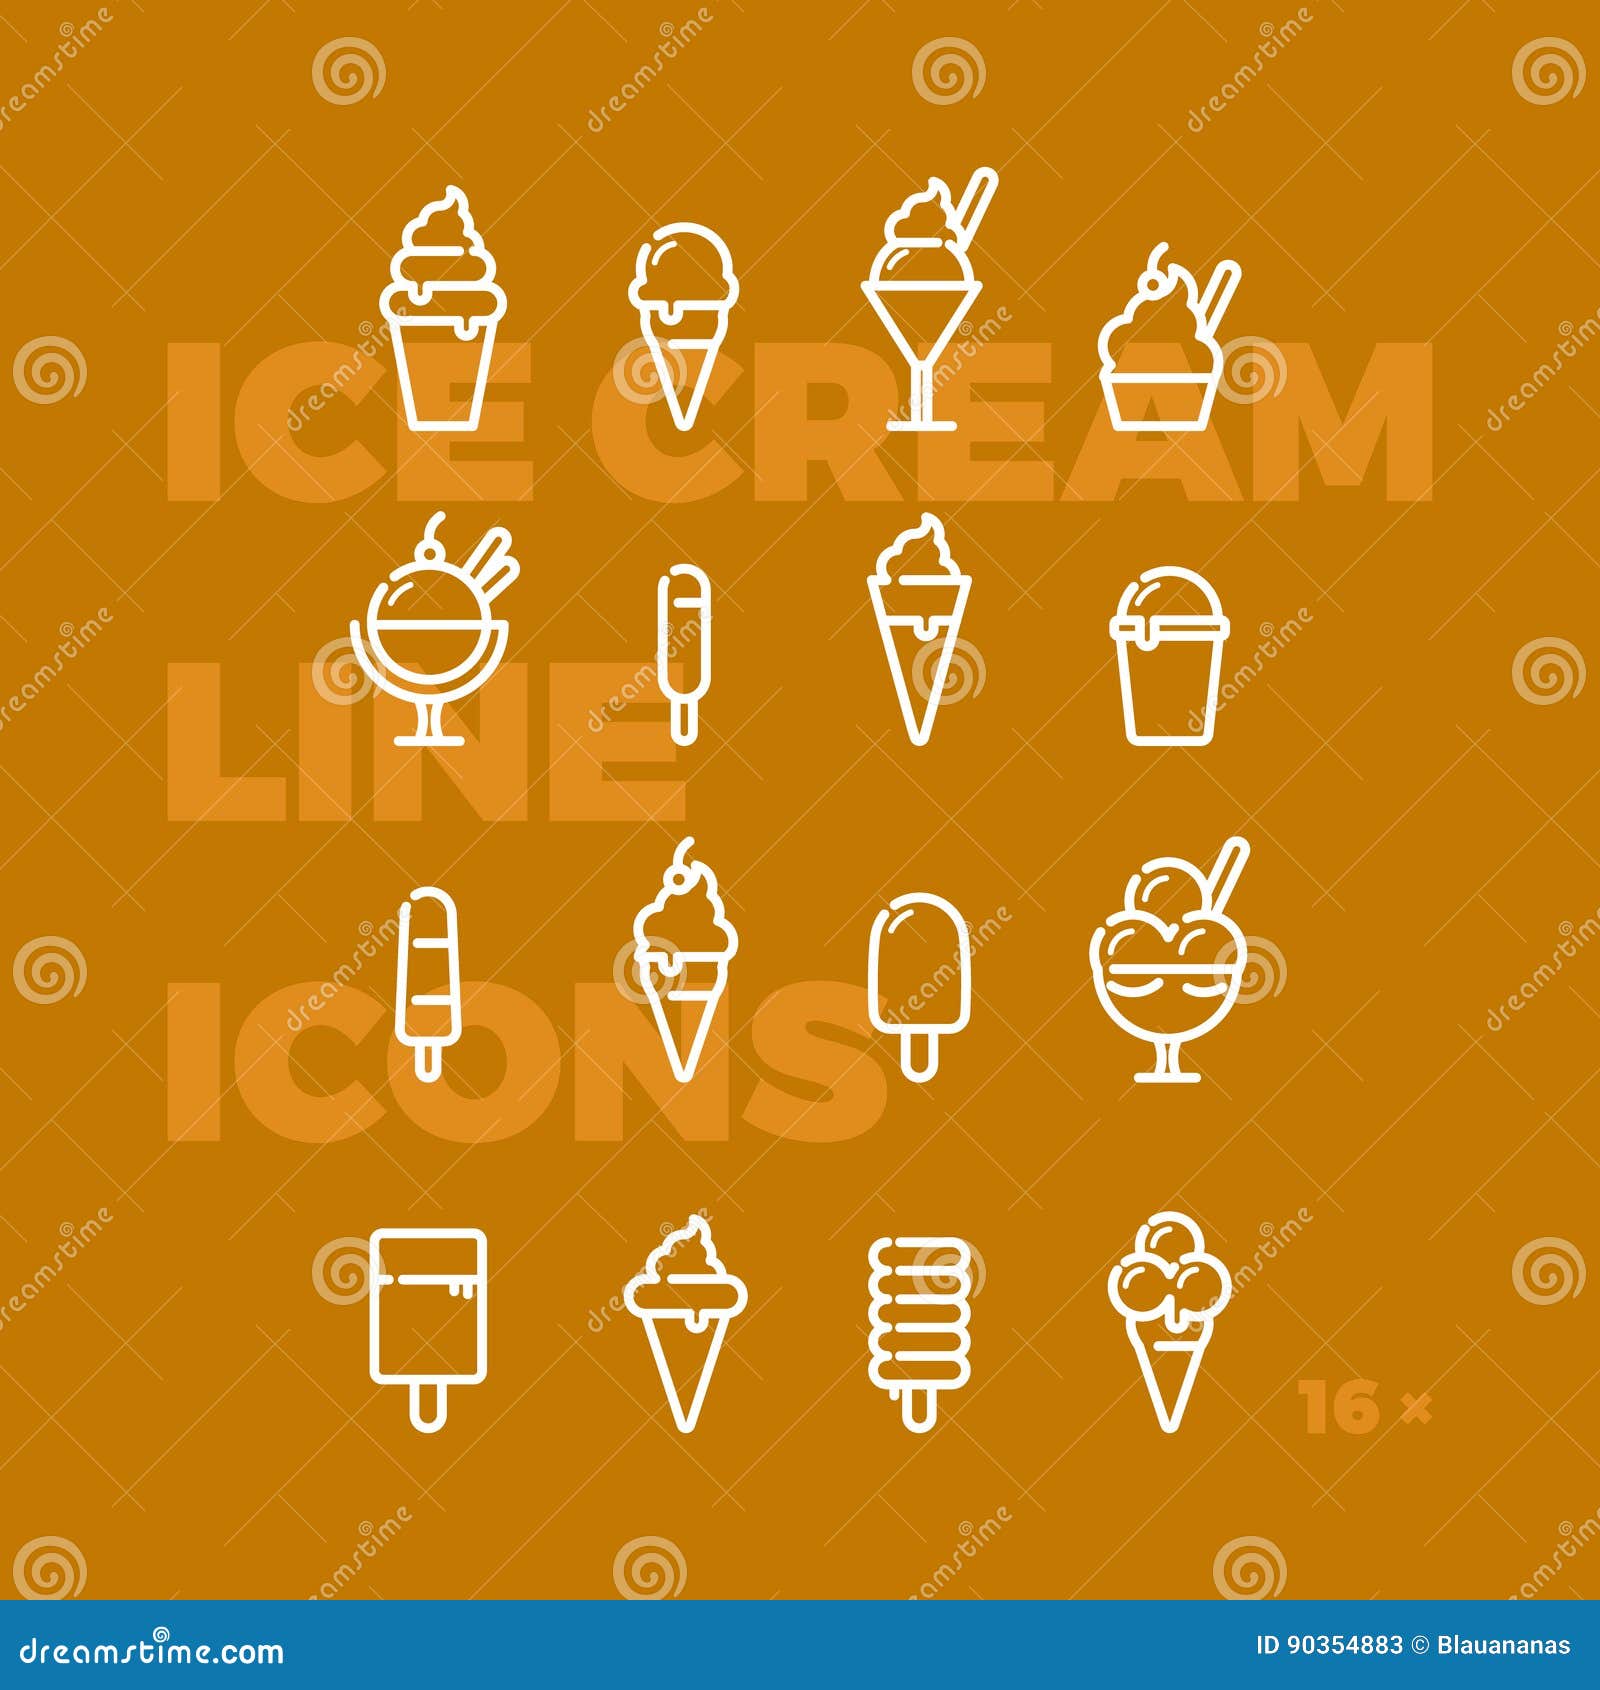 ice cream linear icons invert